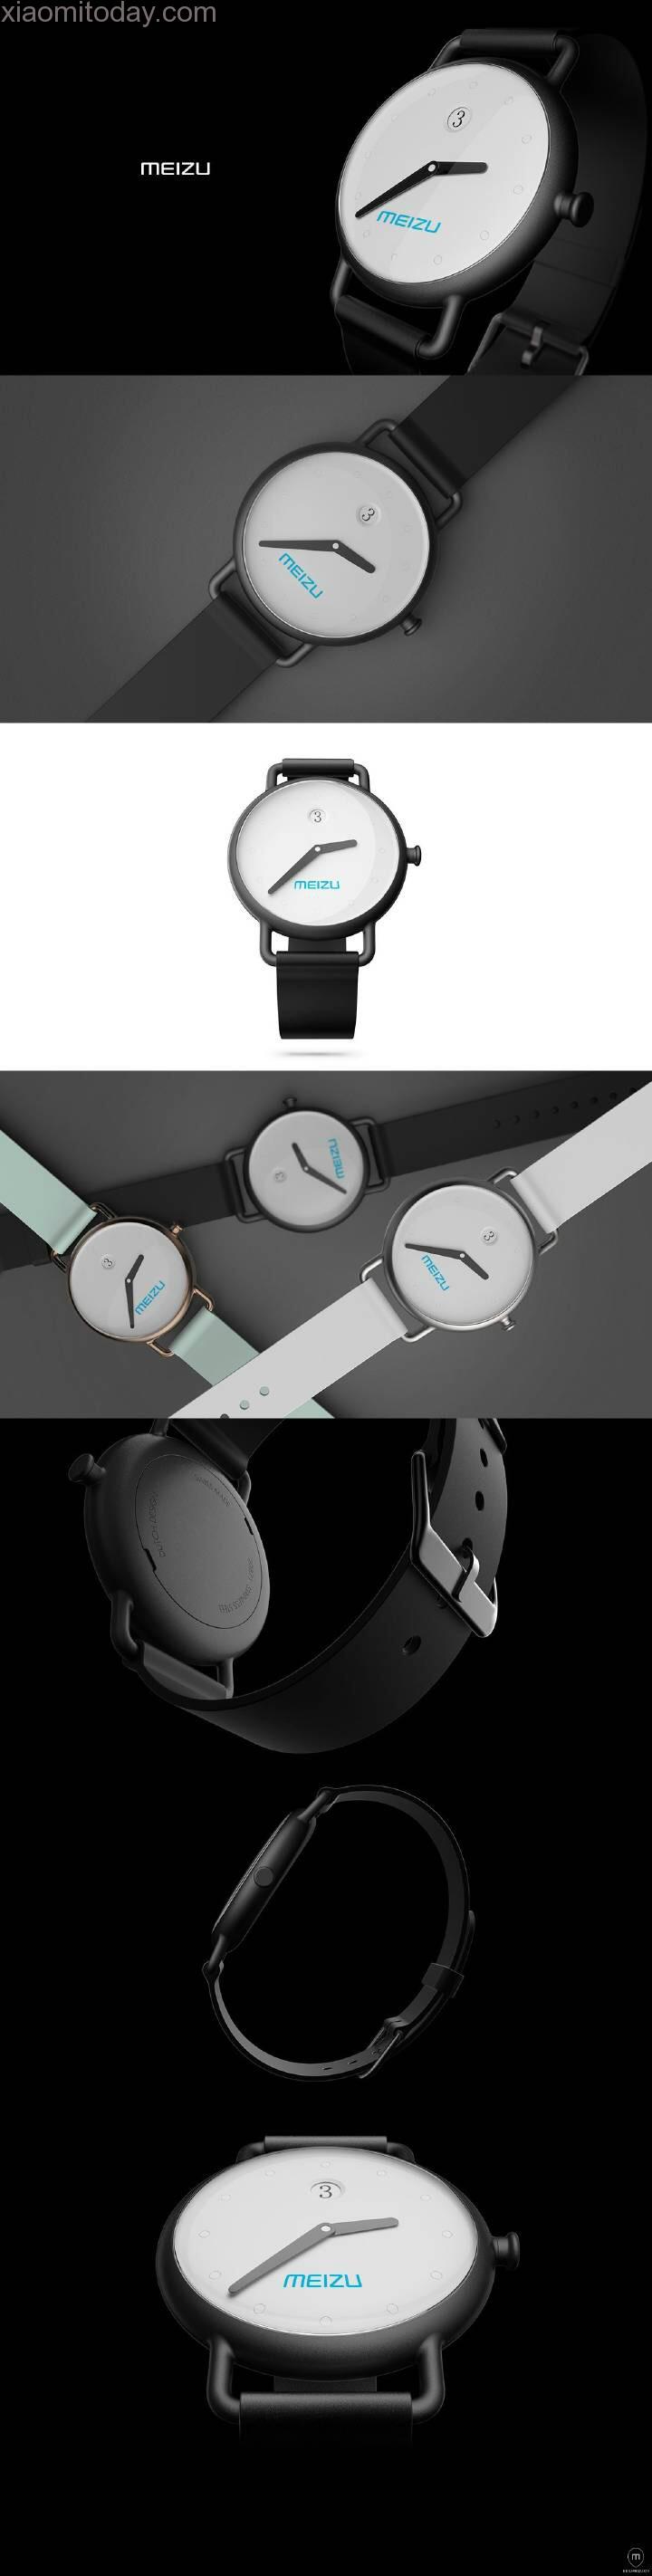 meizu-smartwatch-different-colors